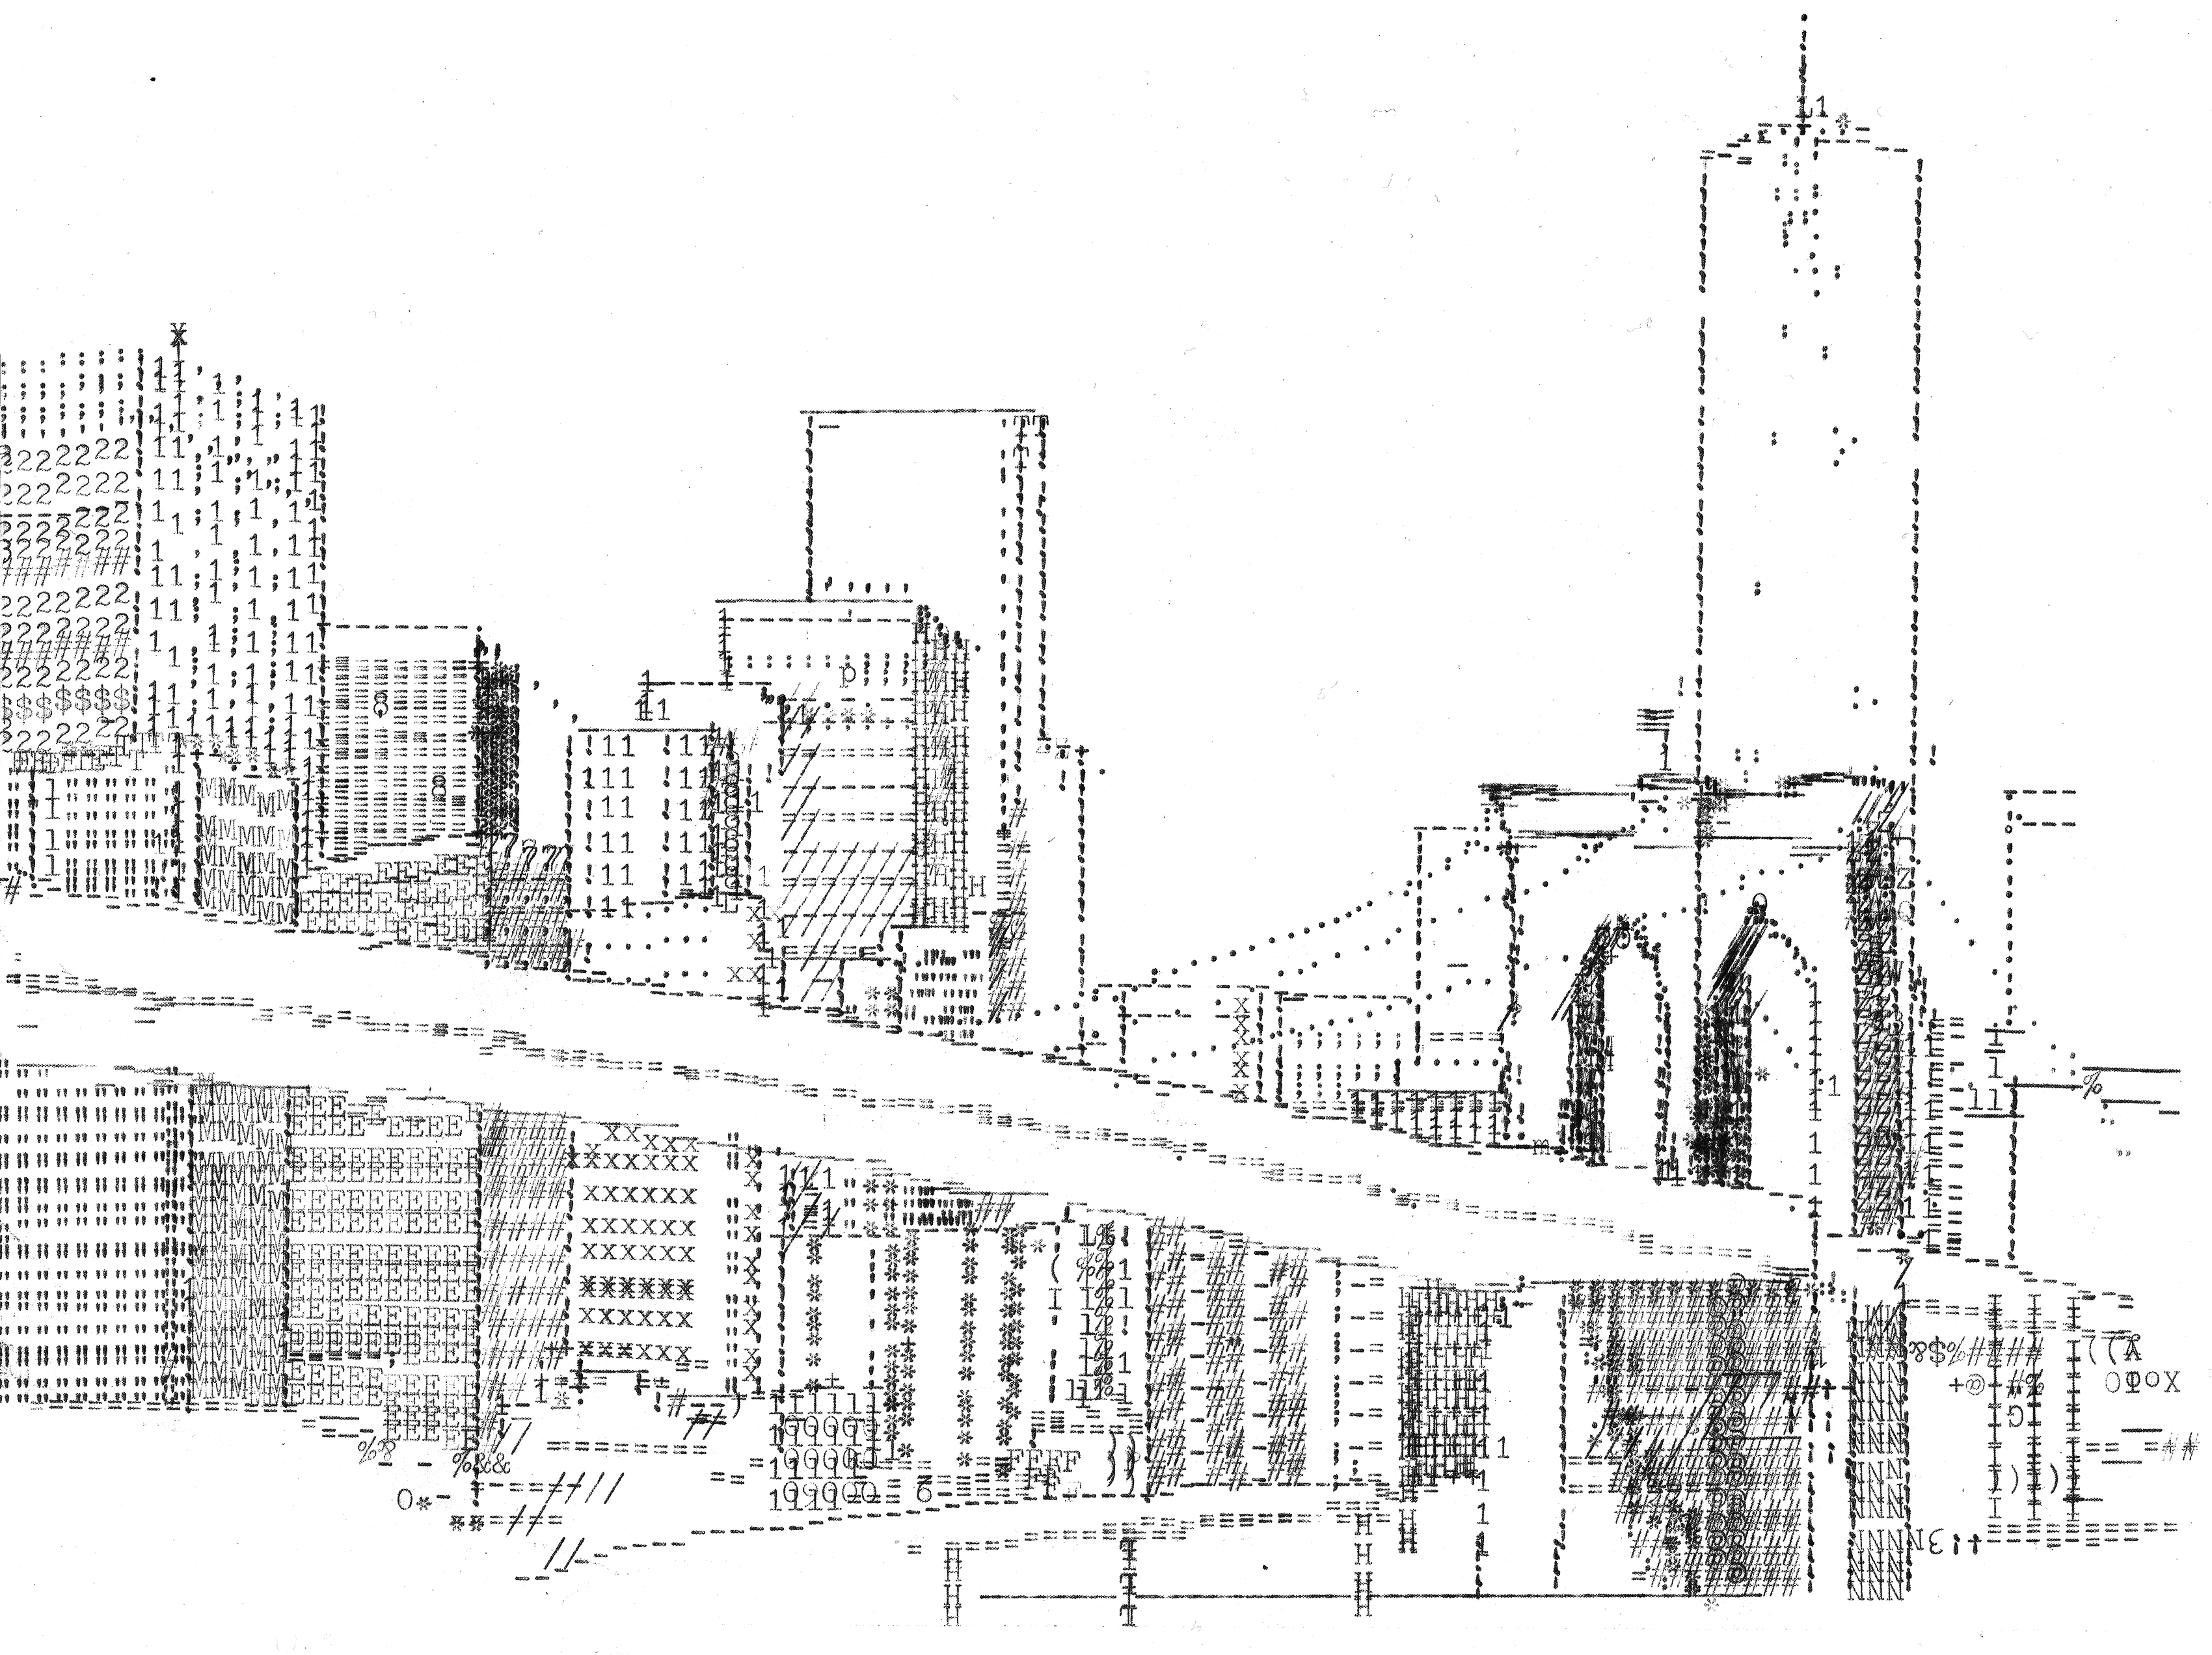 a drawing of new york city skyline, facing the brooklyn bridge and manhattan